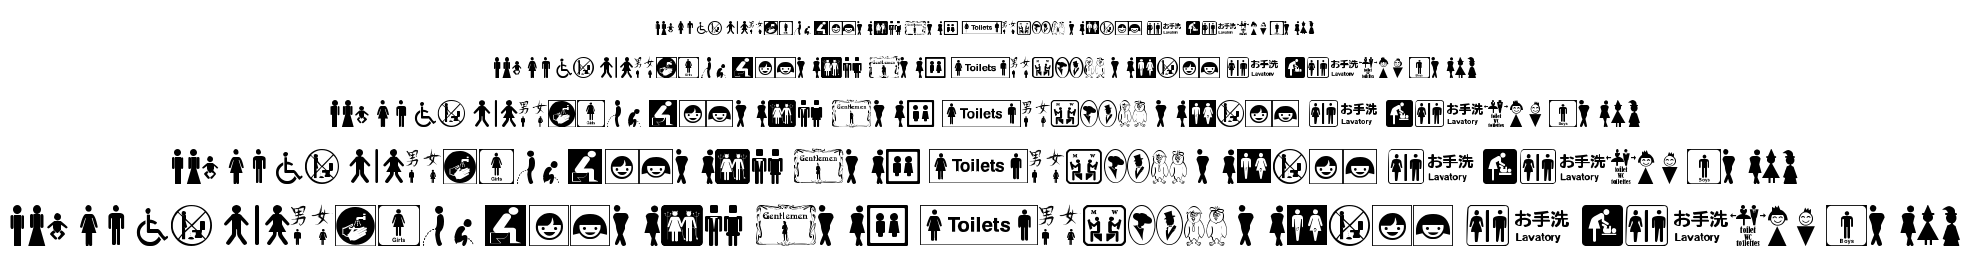 Restroom Signs TFB font